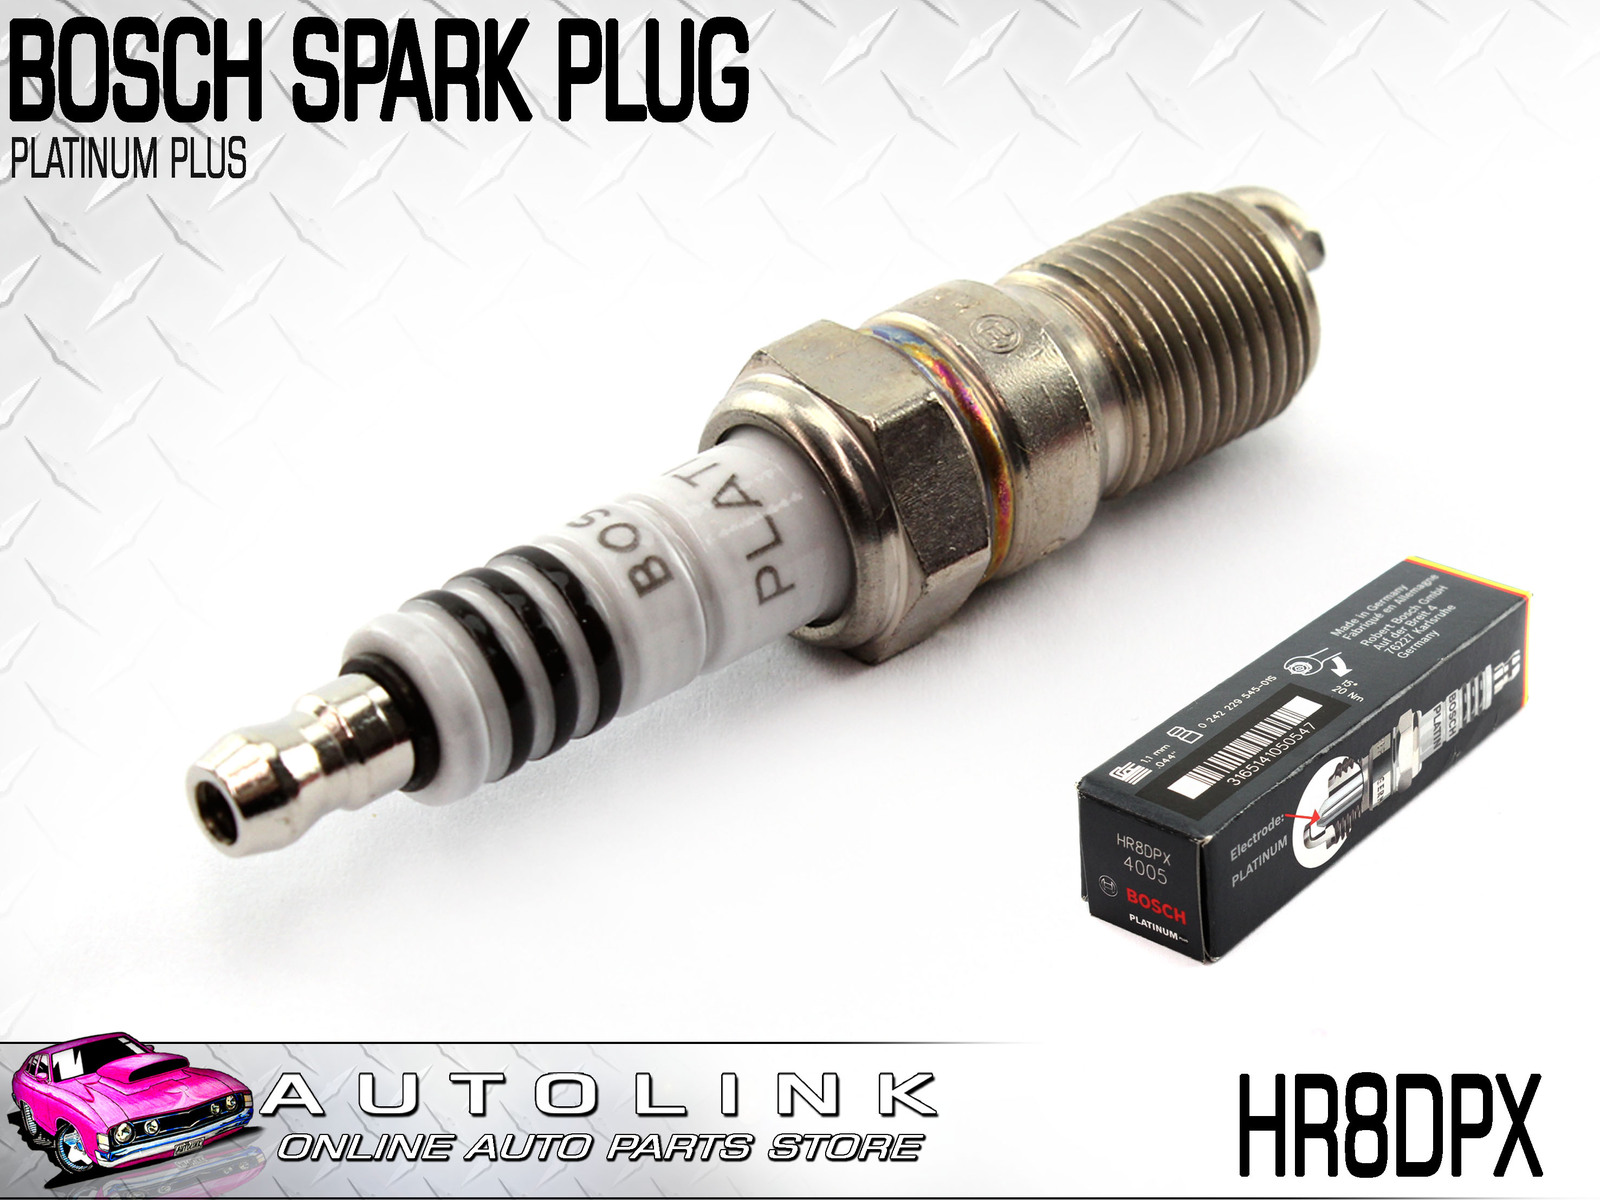 Pack of 1 Bosch 4005 HR8DPX+ Platinum Plus Spark Plug, 